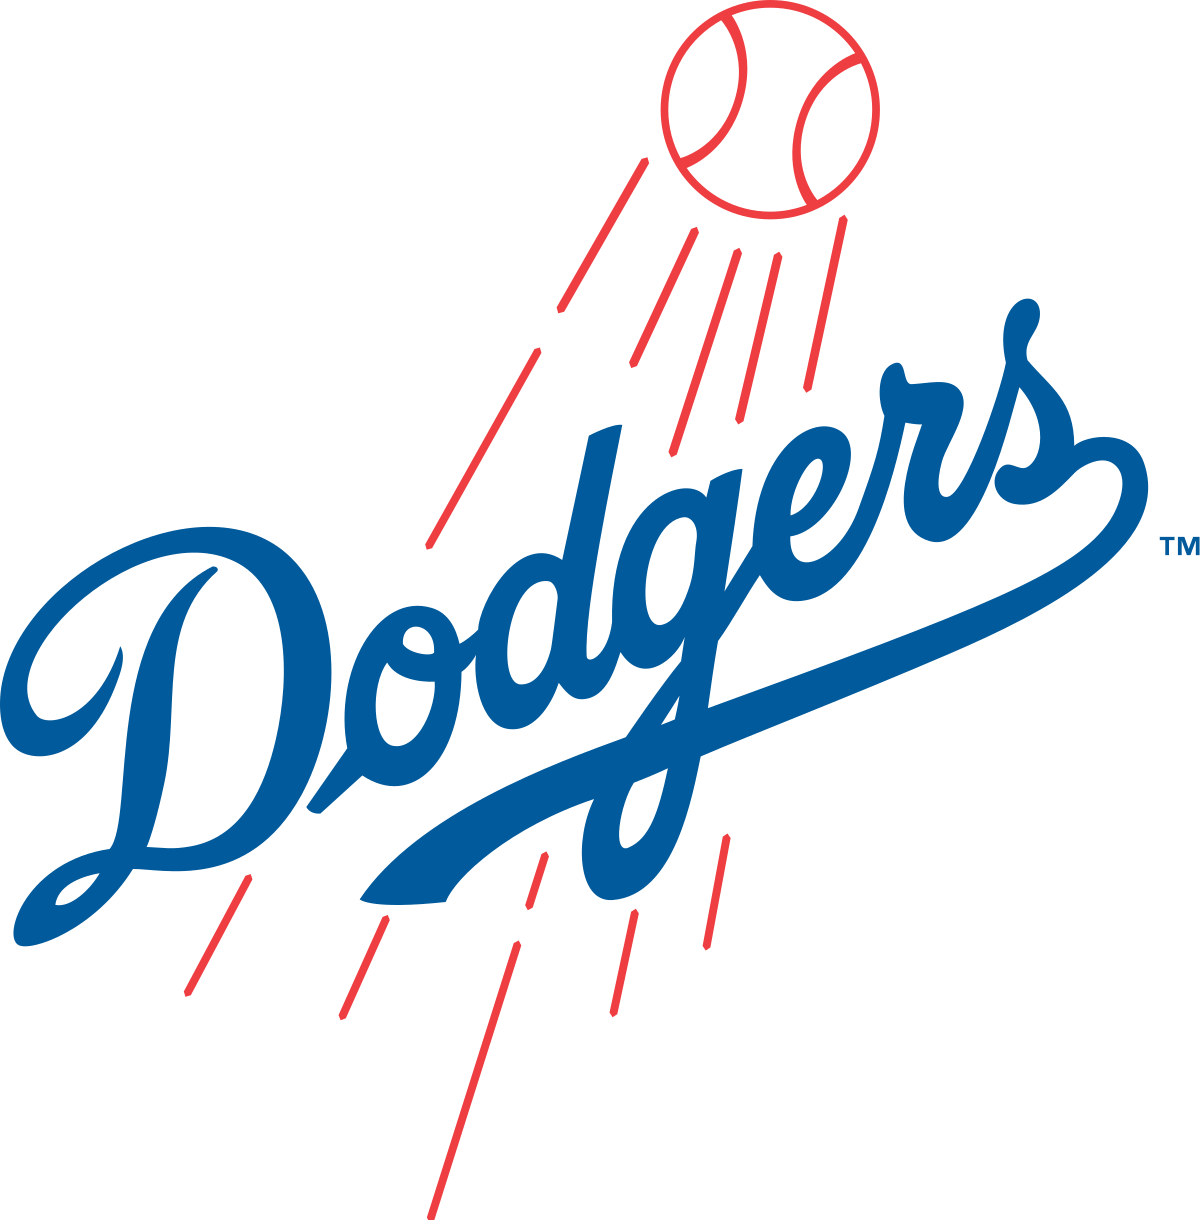 los angeles dodgers logo